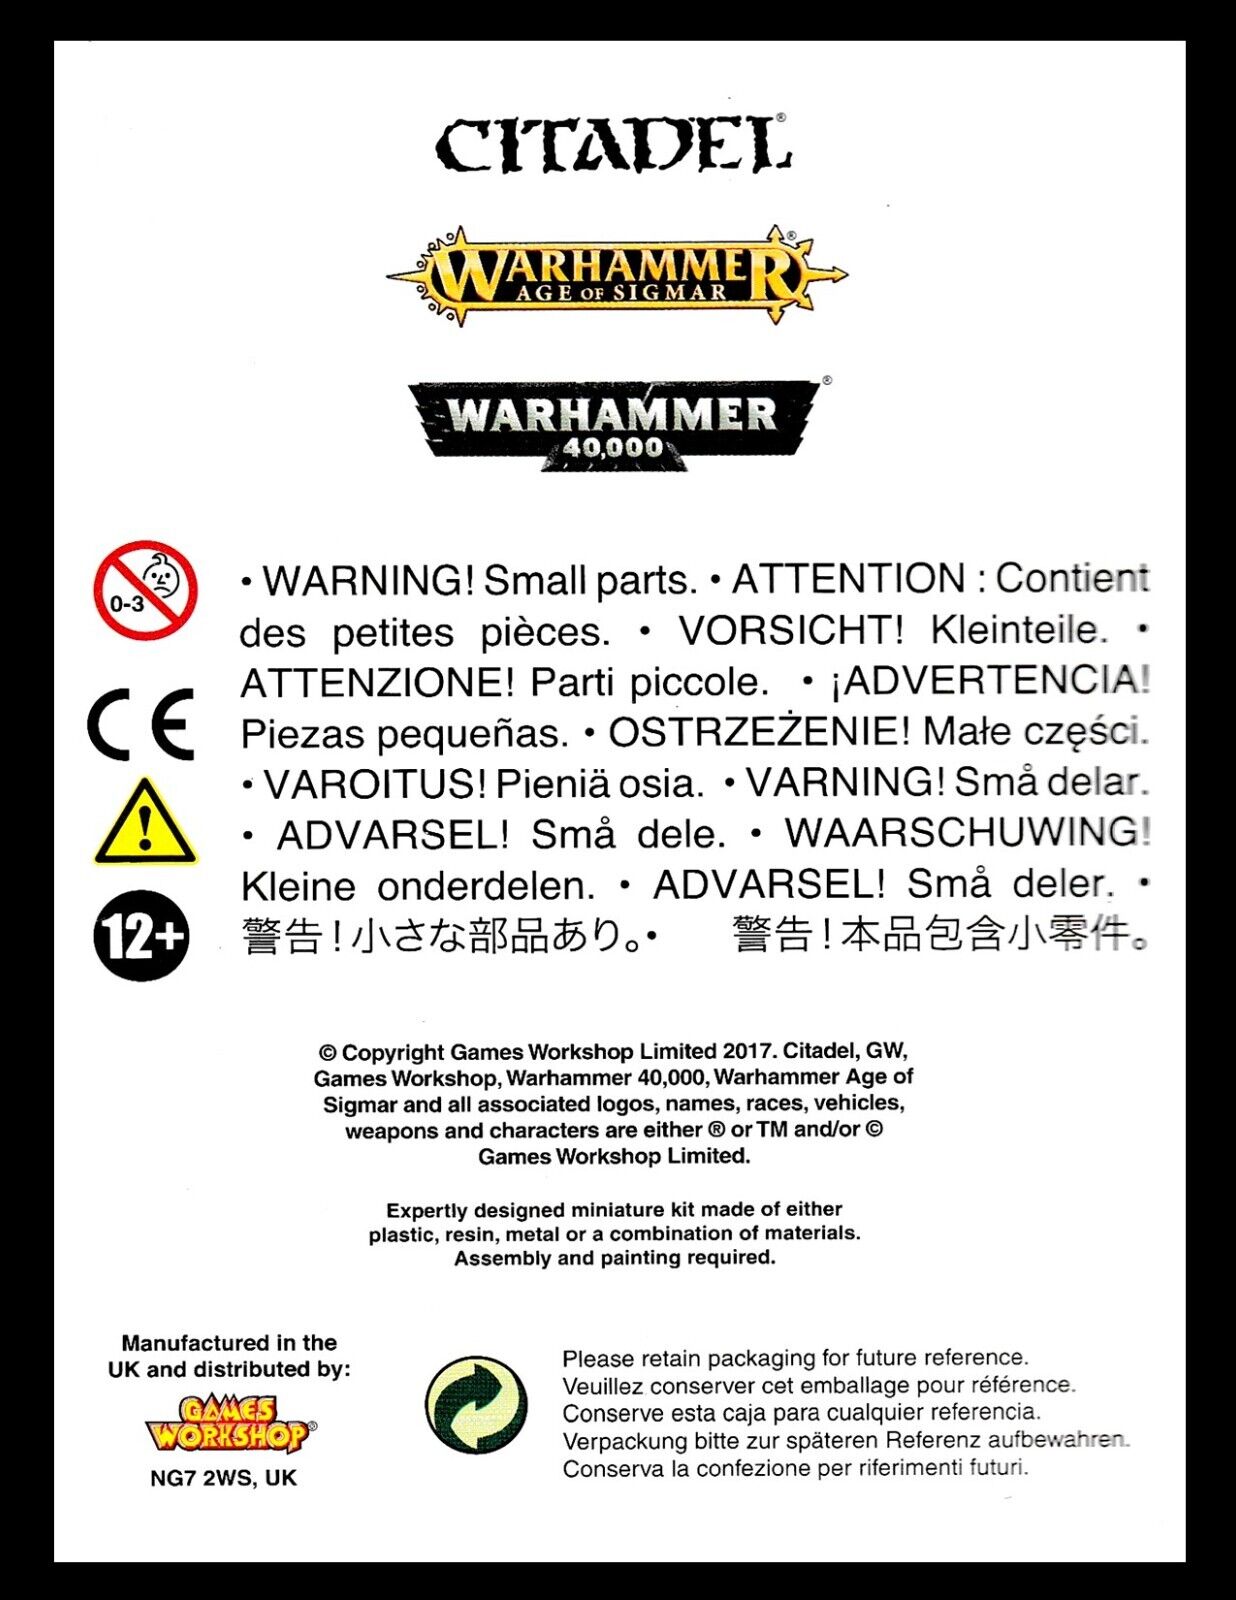 Khorne Lord of Skulls Chaos Space Marines & World Eaters Warhammer 40K NIB! WBGames